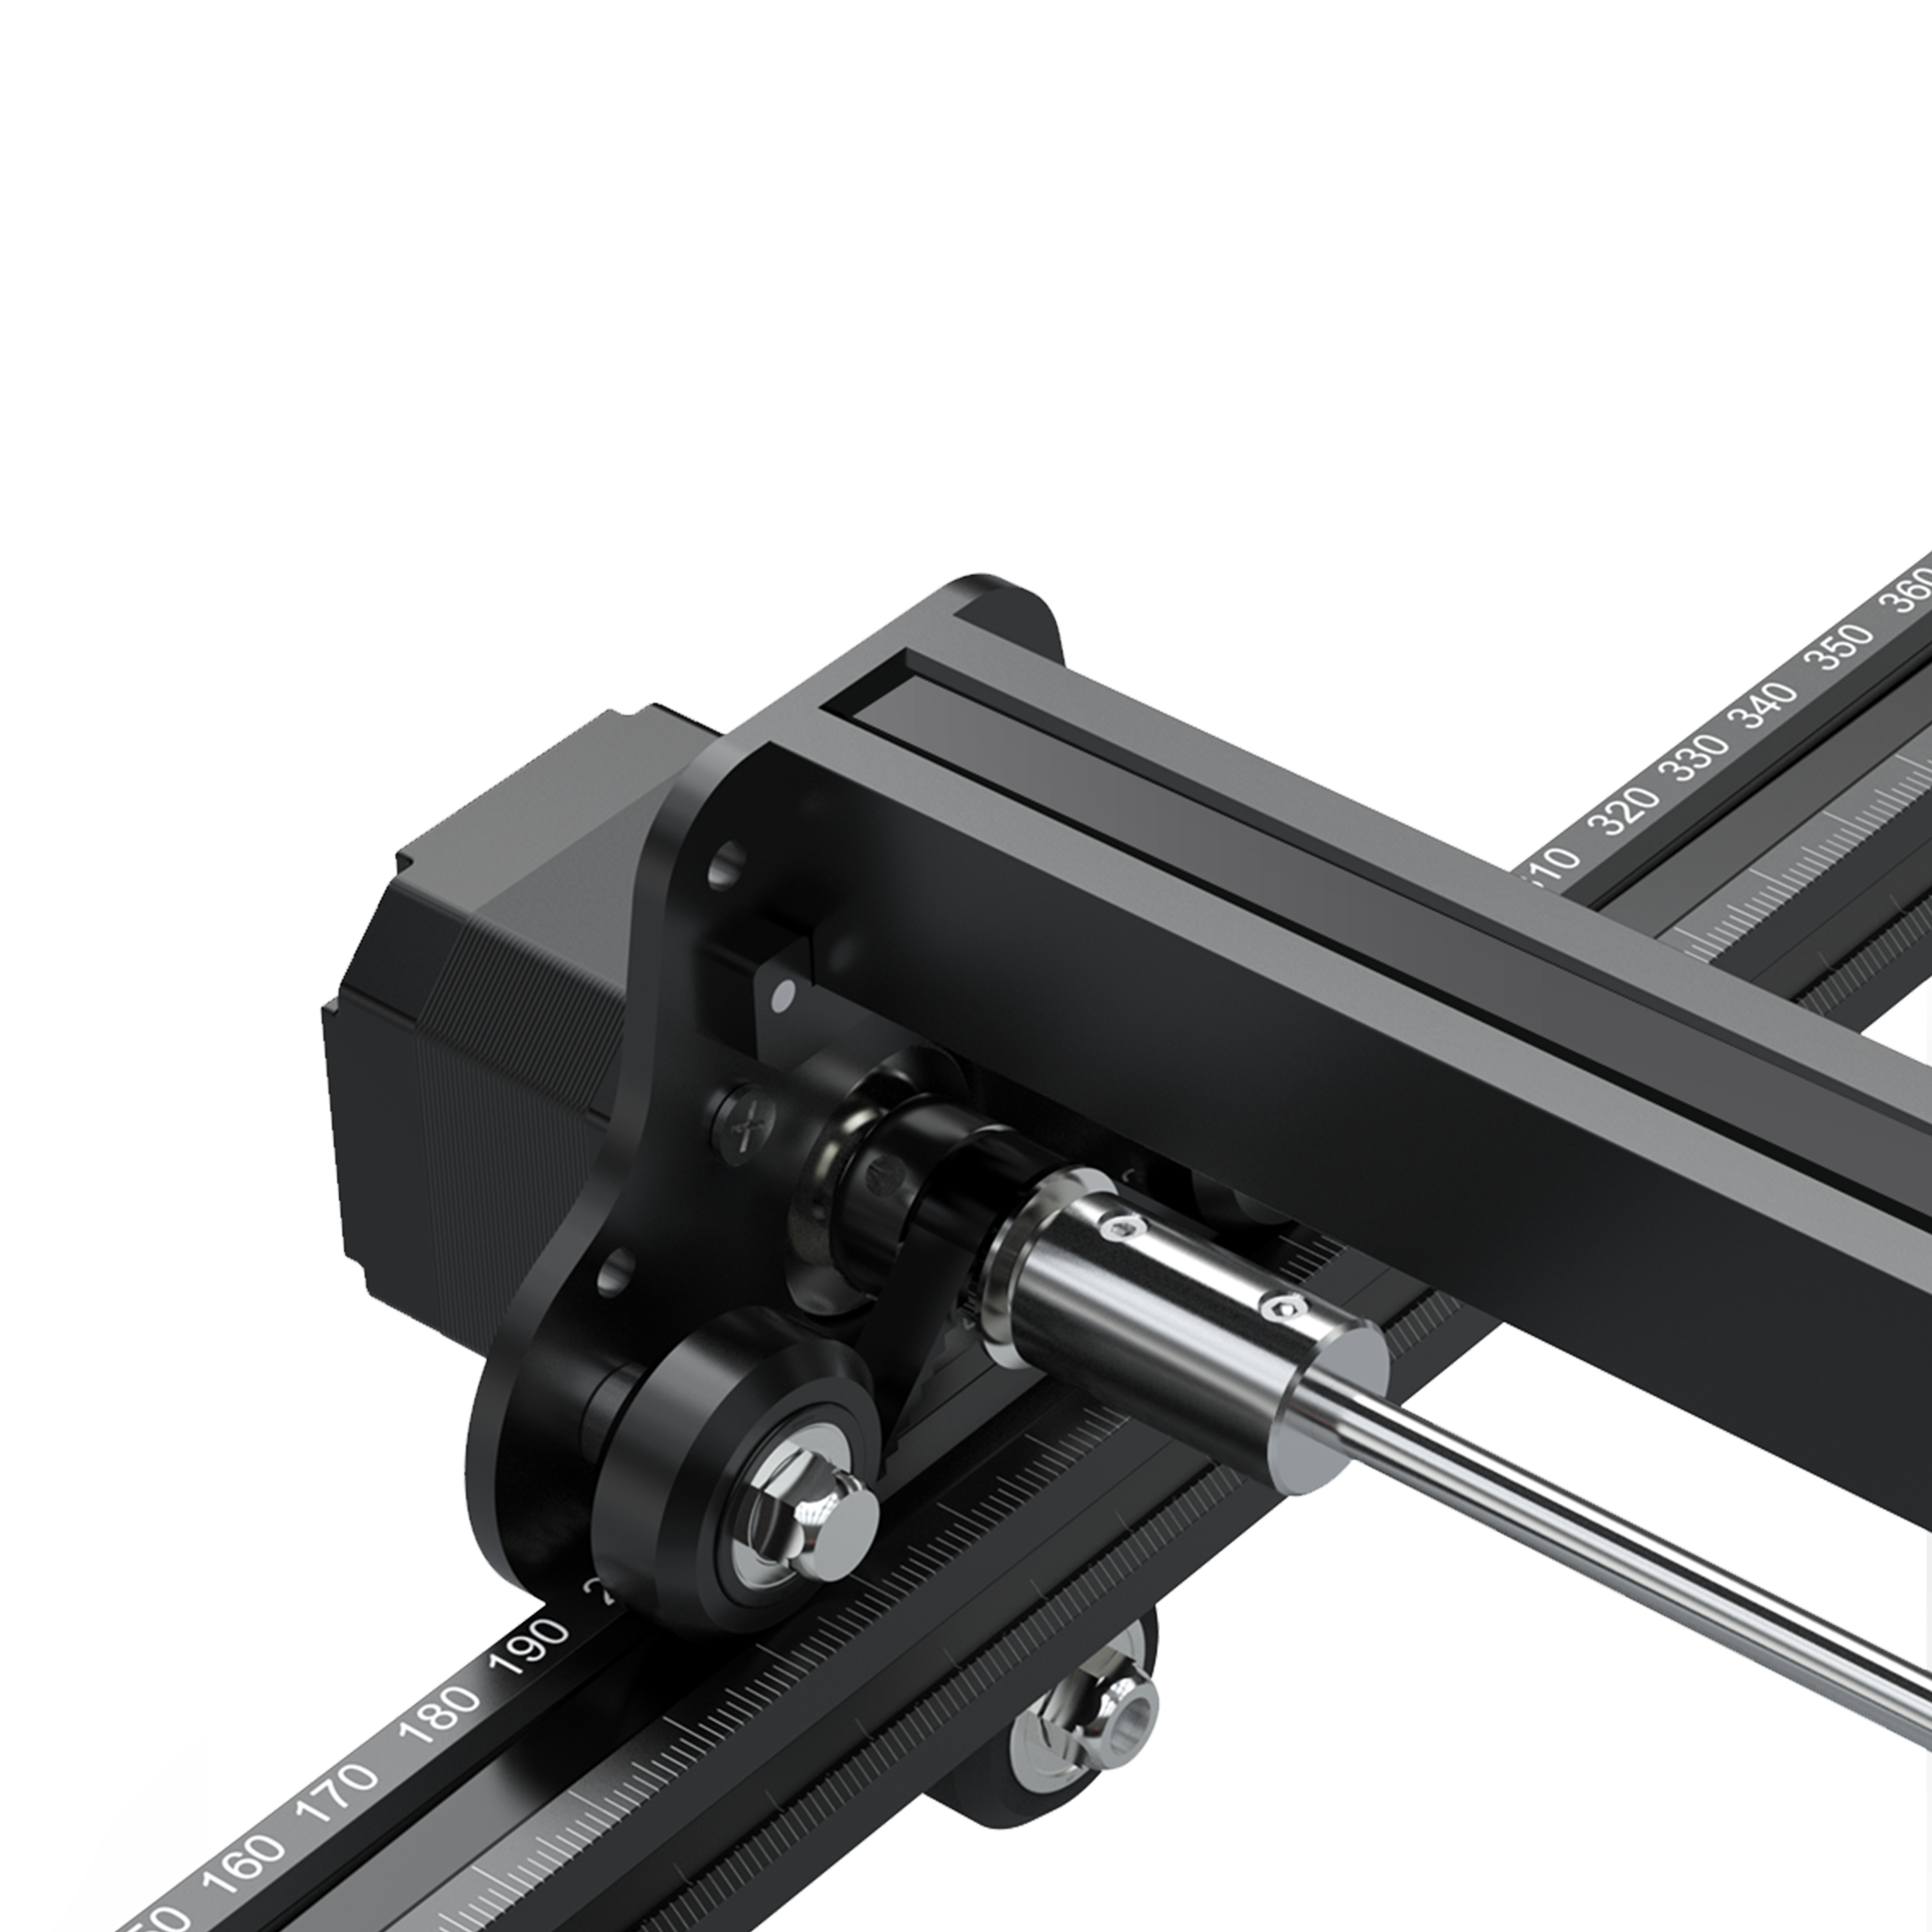 X3 Pro 10W Laser Engraving Machine With Air Pump Kit